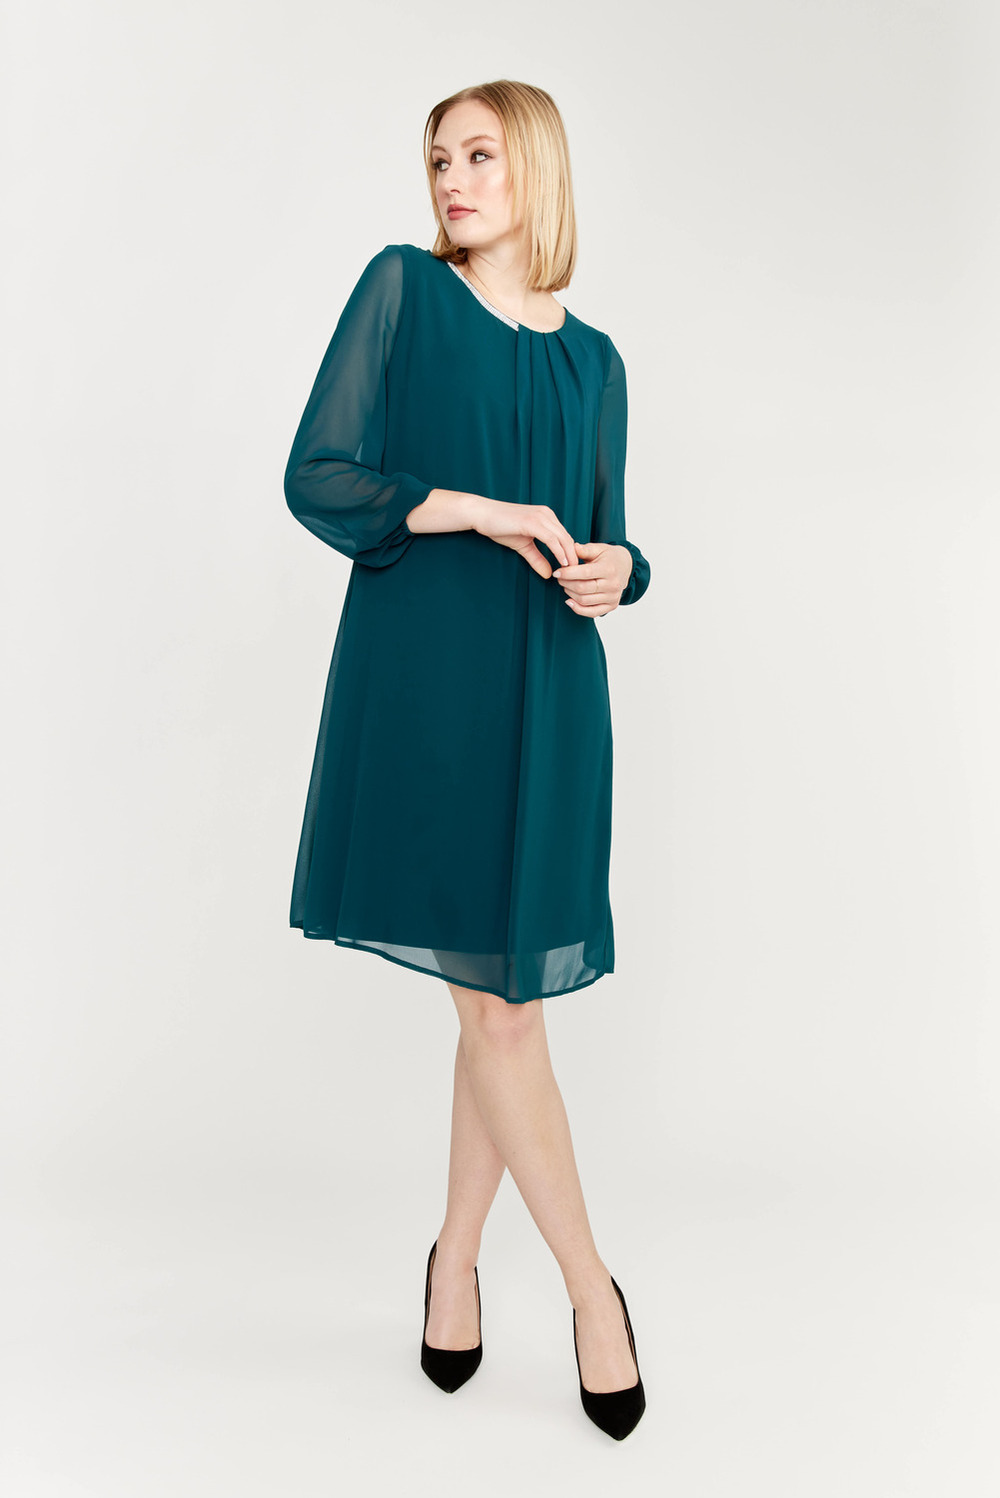 Embellished Chiffon Dress Style 239123. Jade